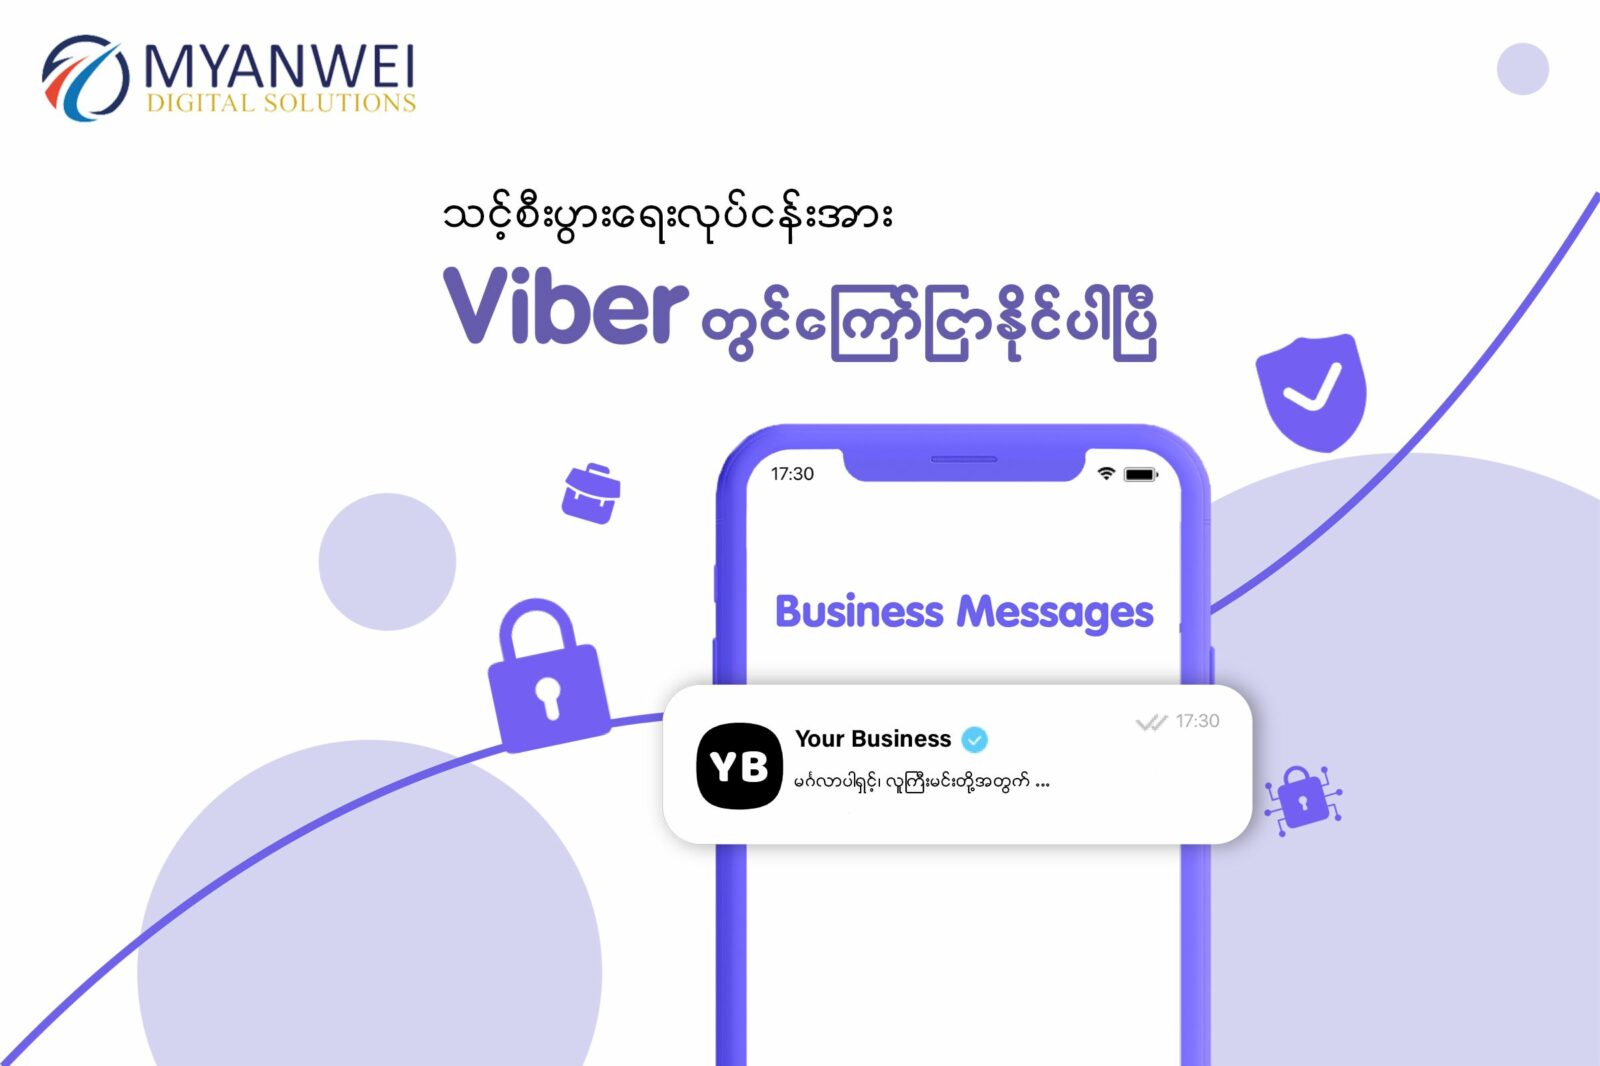 Photo of Viber Messaging on Phone Screen - Viber messaging service, Digital Marketing Agency in Yangon